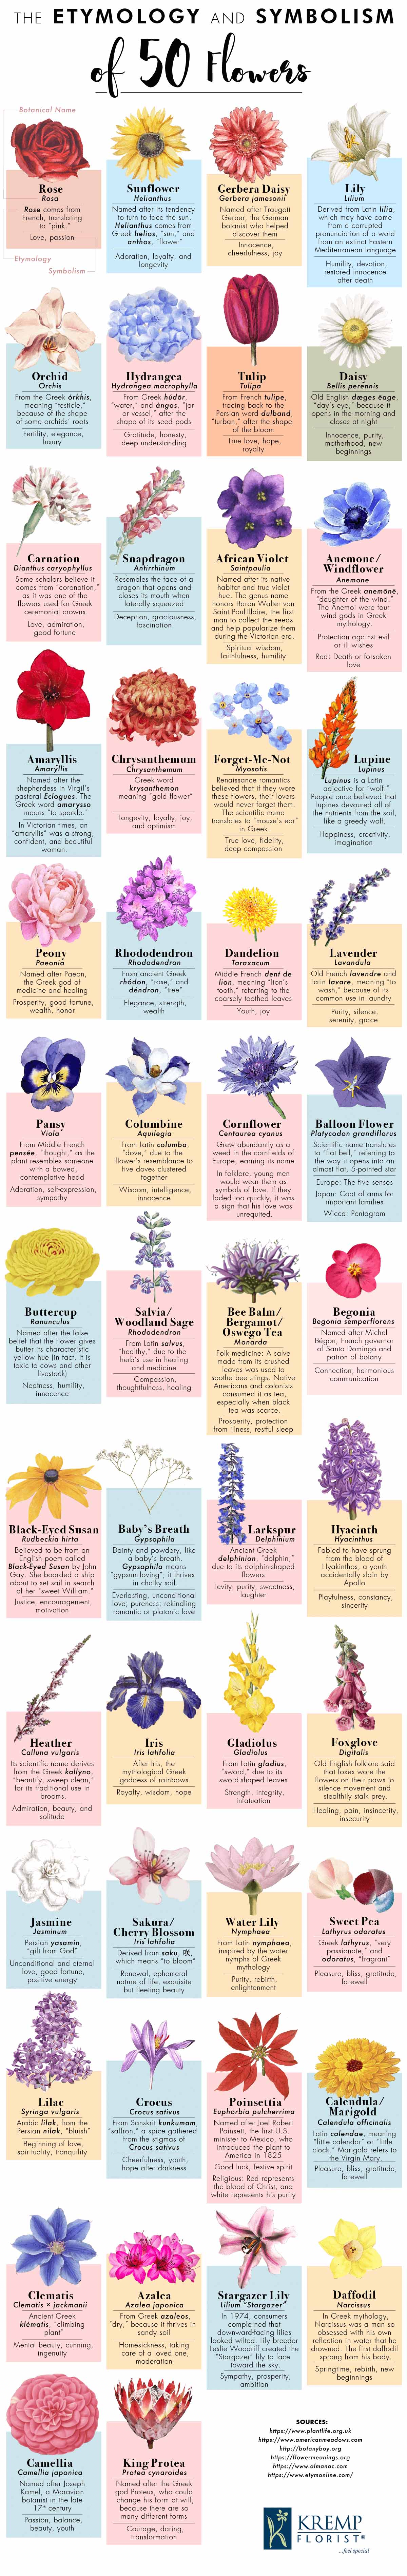 Etymology and Symbolism of 50 Flowers